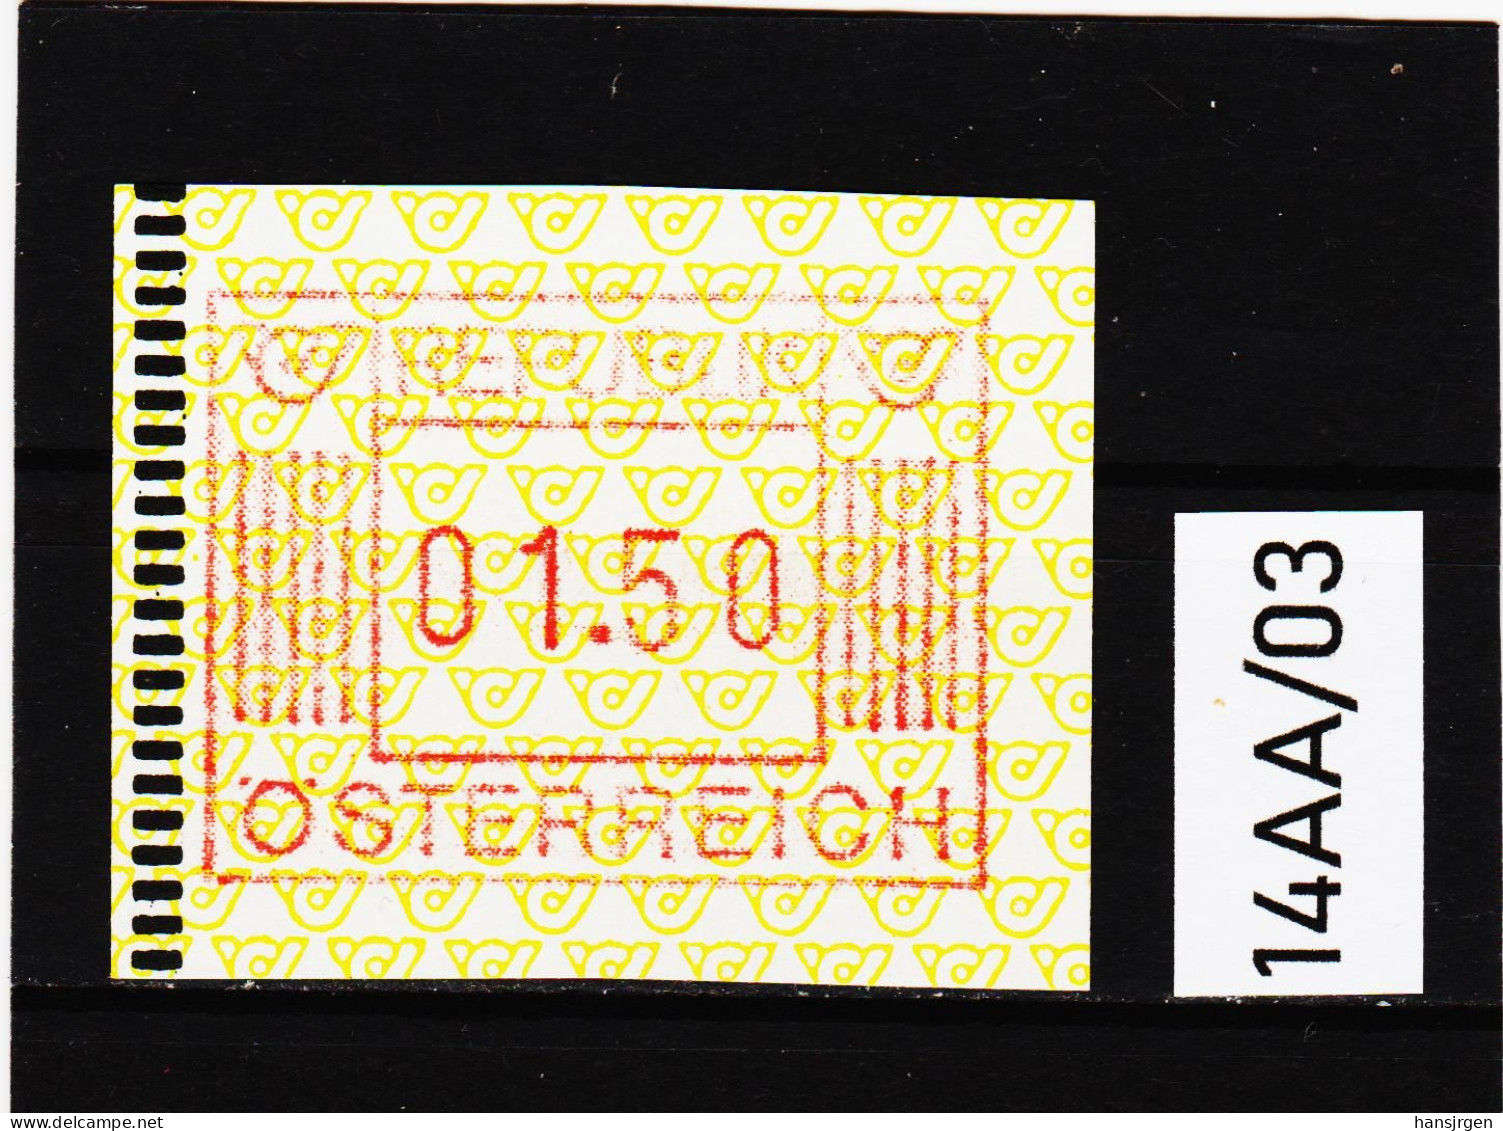 14AA/03 ÖSTERREICH 1983 AUTOMATENMARKEN 1. AUSGABE  1,50 Schilling   ** Postfrisch - Timbres De Distributeurs [ATM]